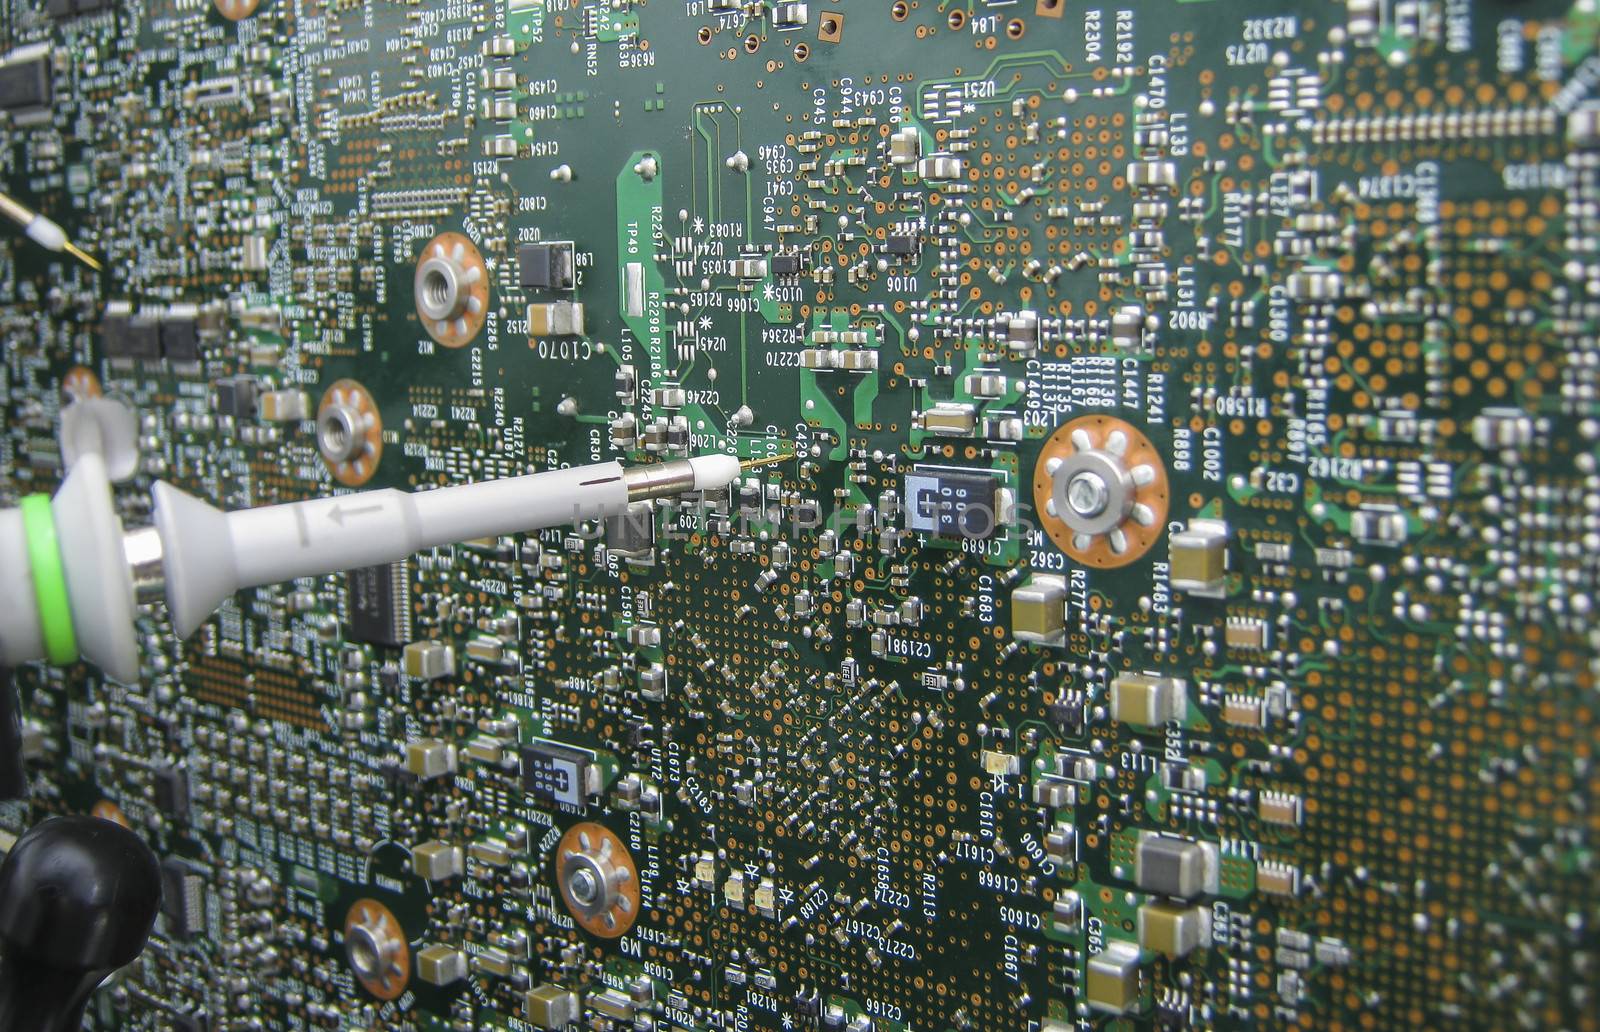 Multimeter probes examining a circuit board  by Sorapop